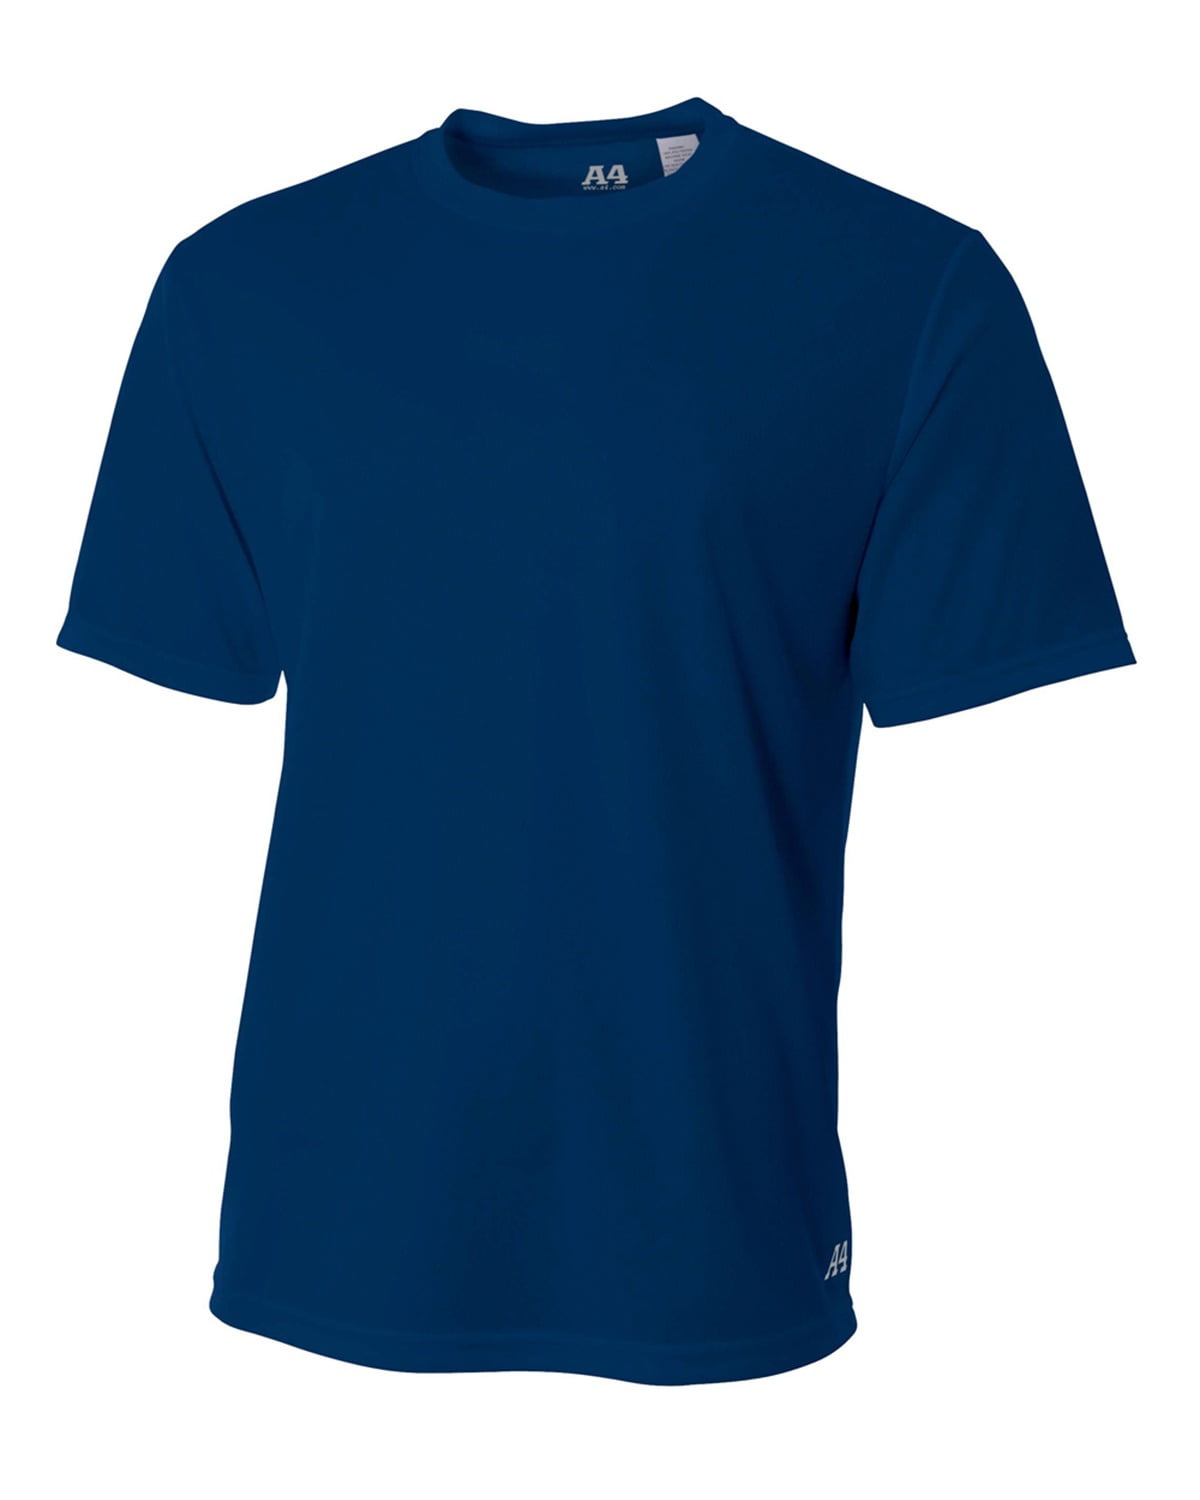 A4 N3252 Men's Shorts Sleeve Crew Birds Eye Mesh T-Shirt - Walmart.com